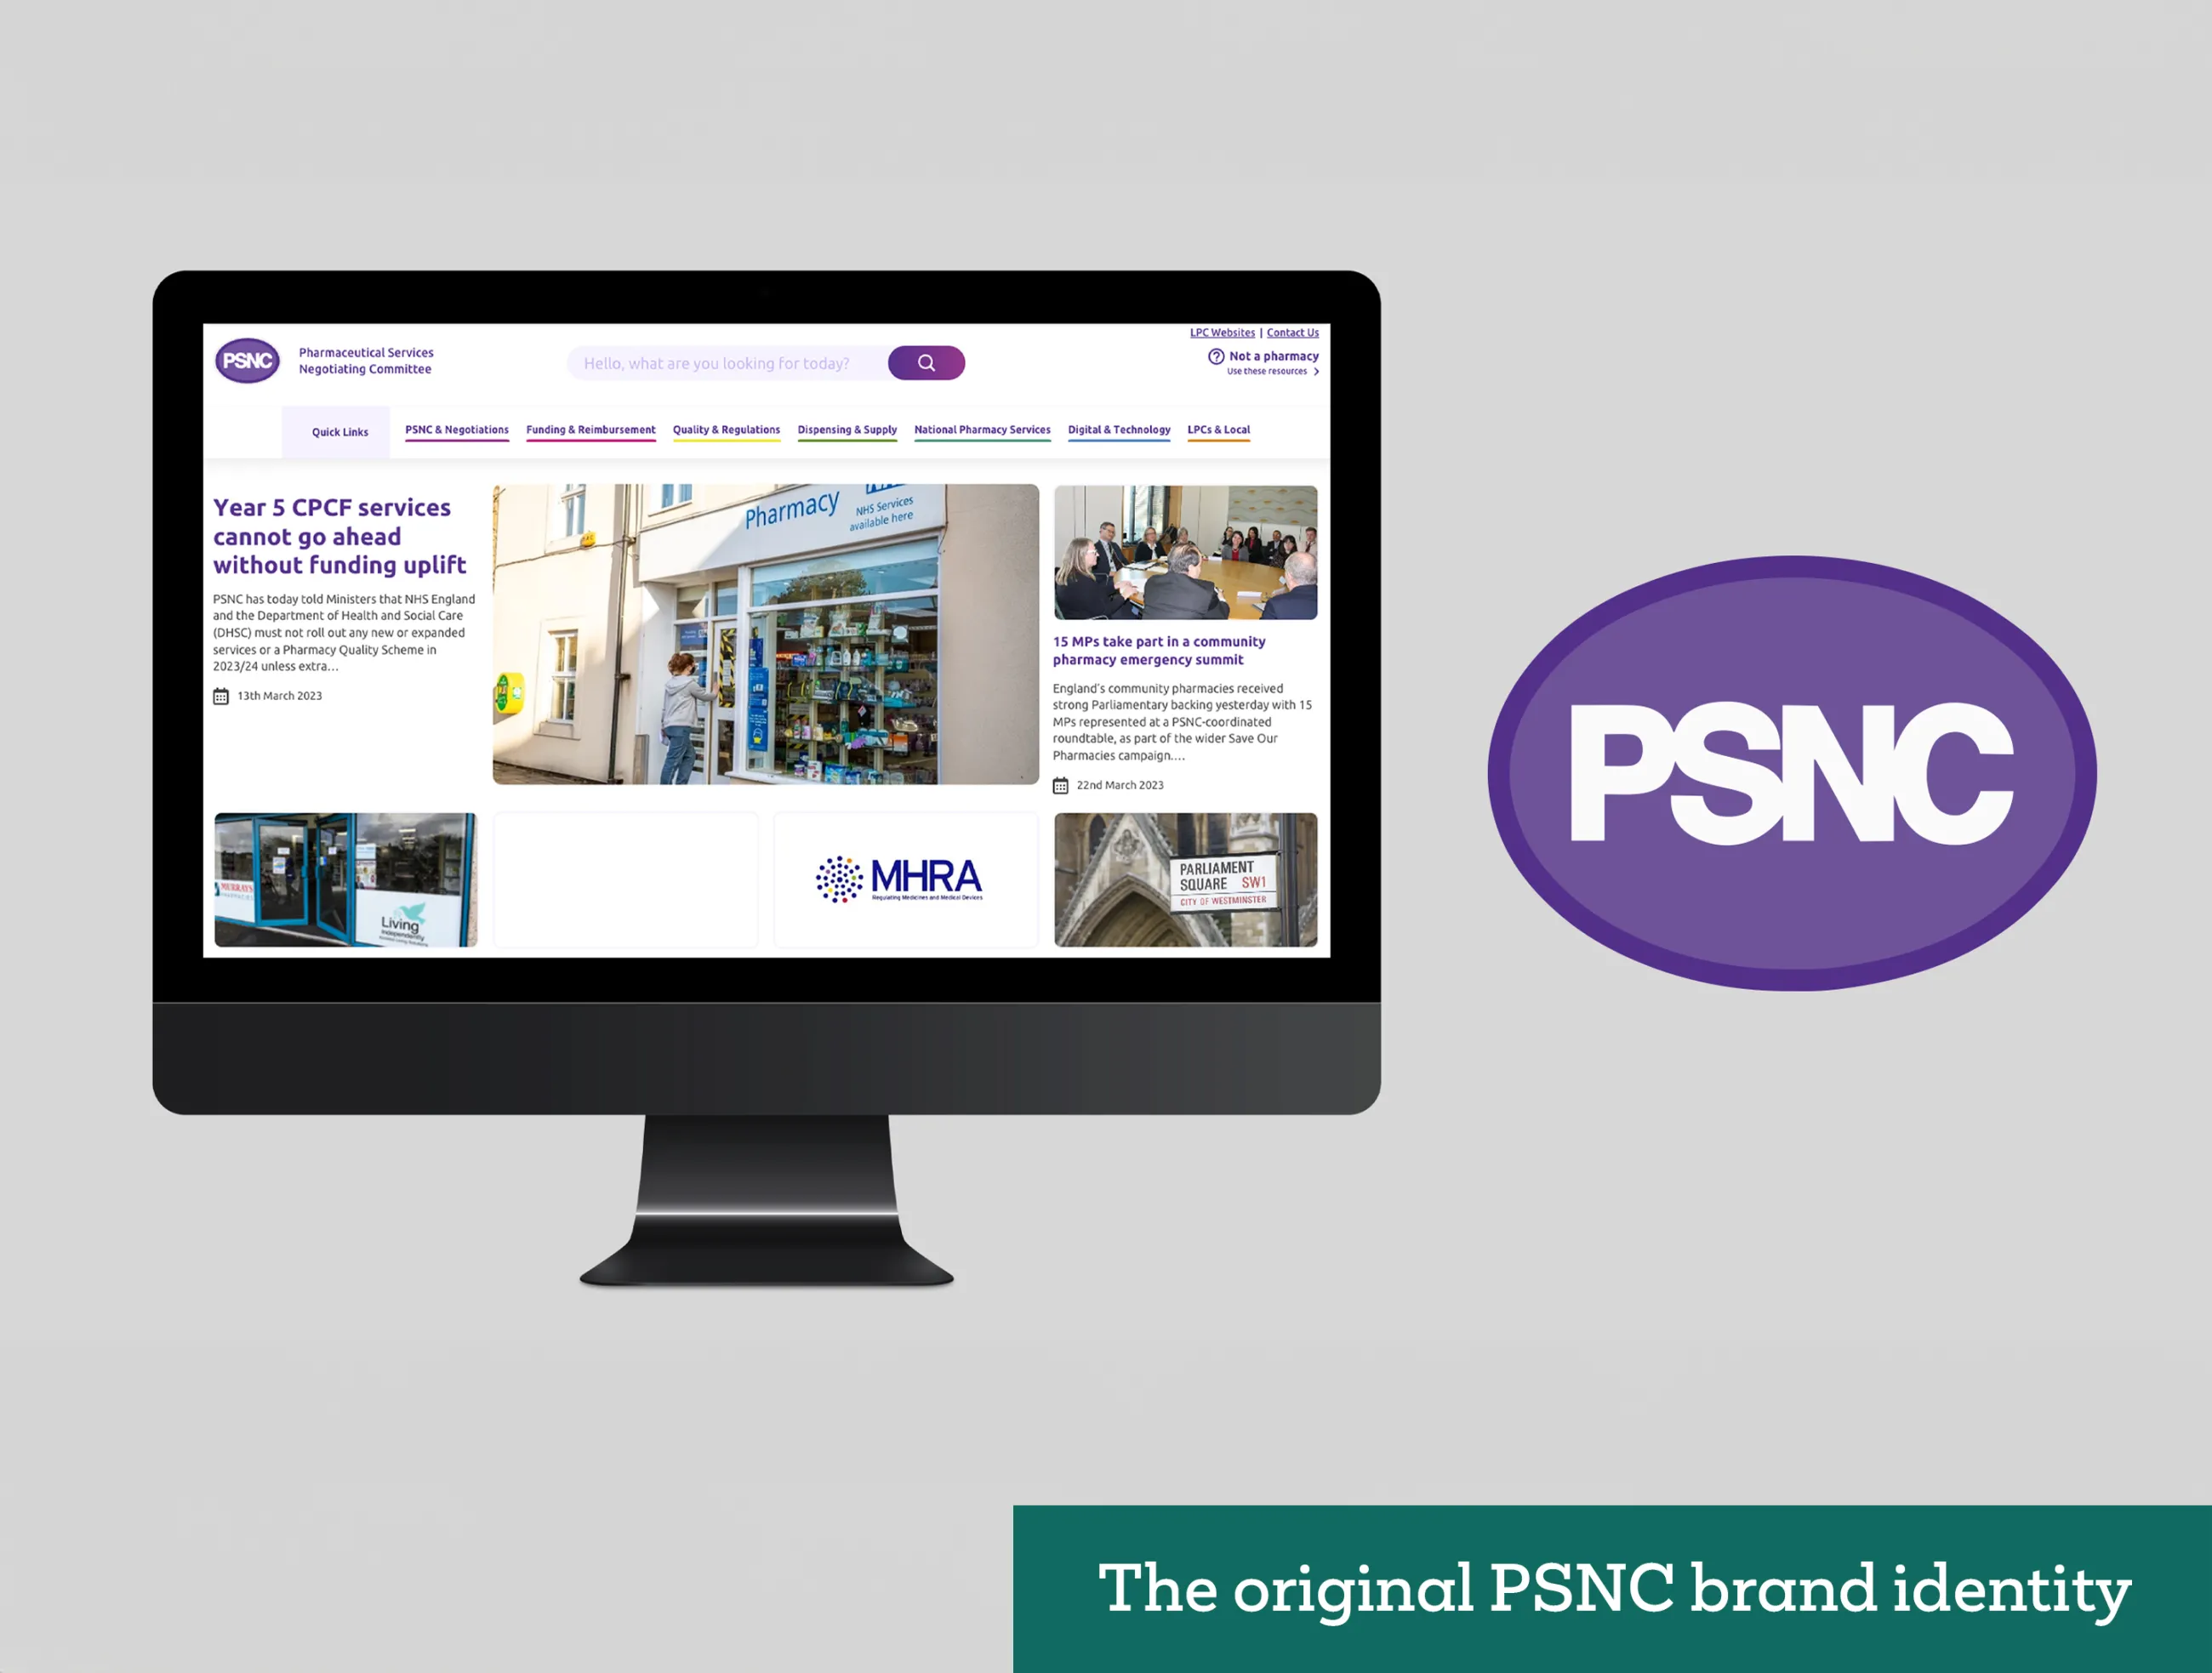 PSNC brand identity before the rebrand to Community Pharmacy England